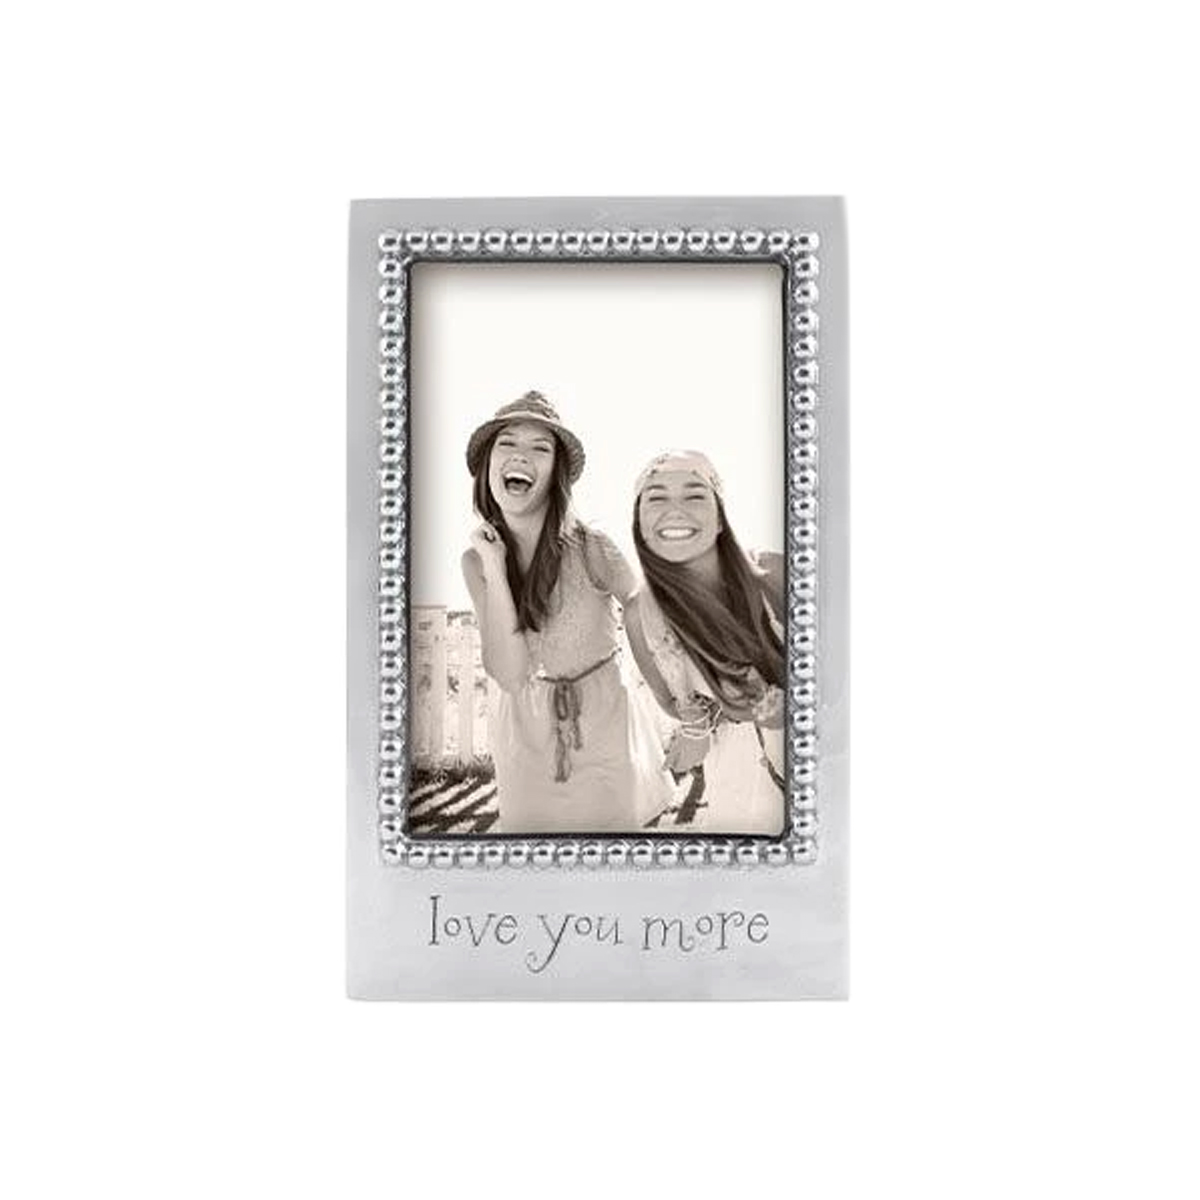 Mariposa - "Love You More" 4x6 Beaded Frame